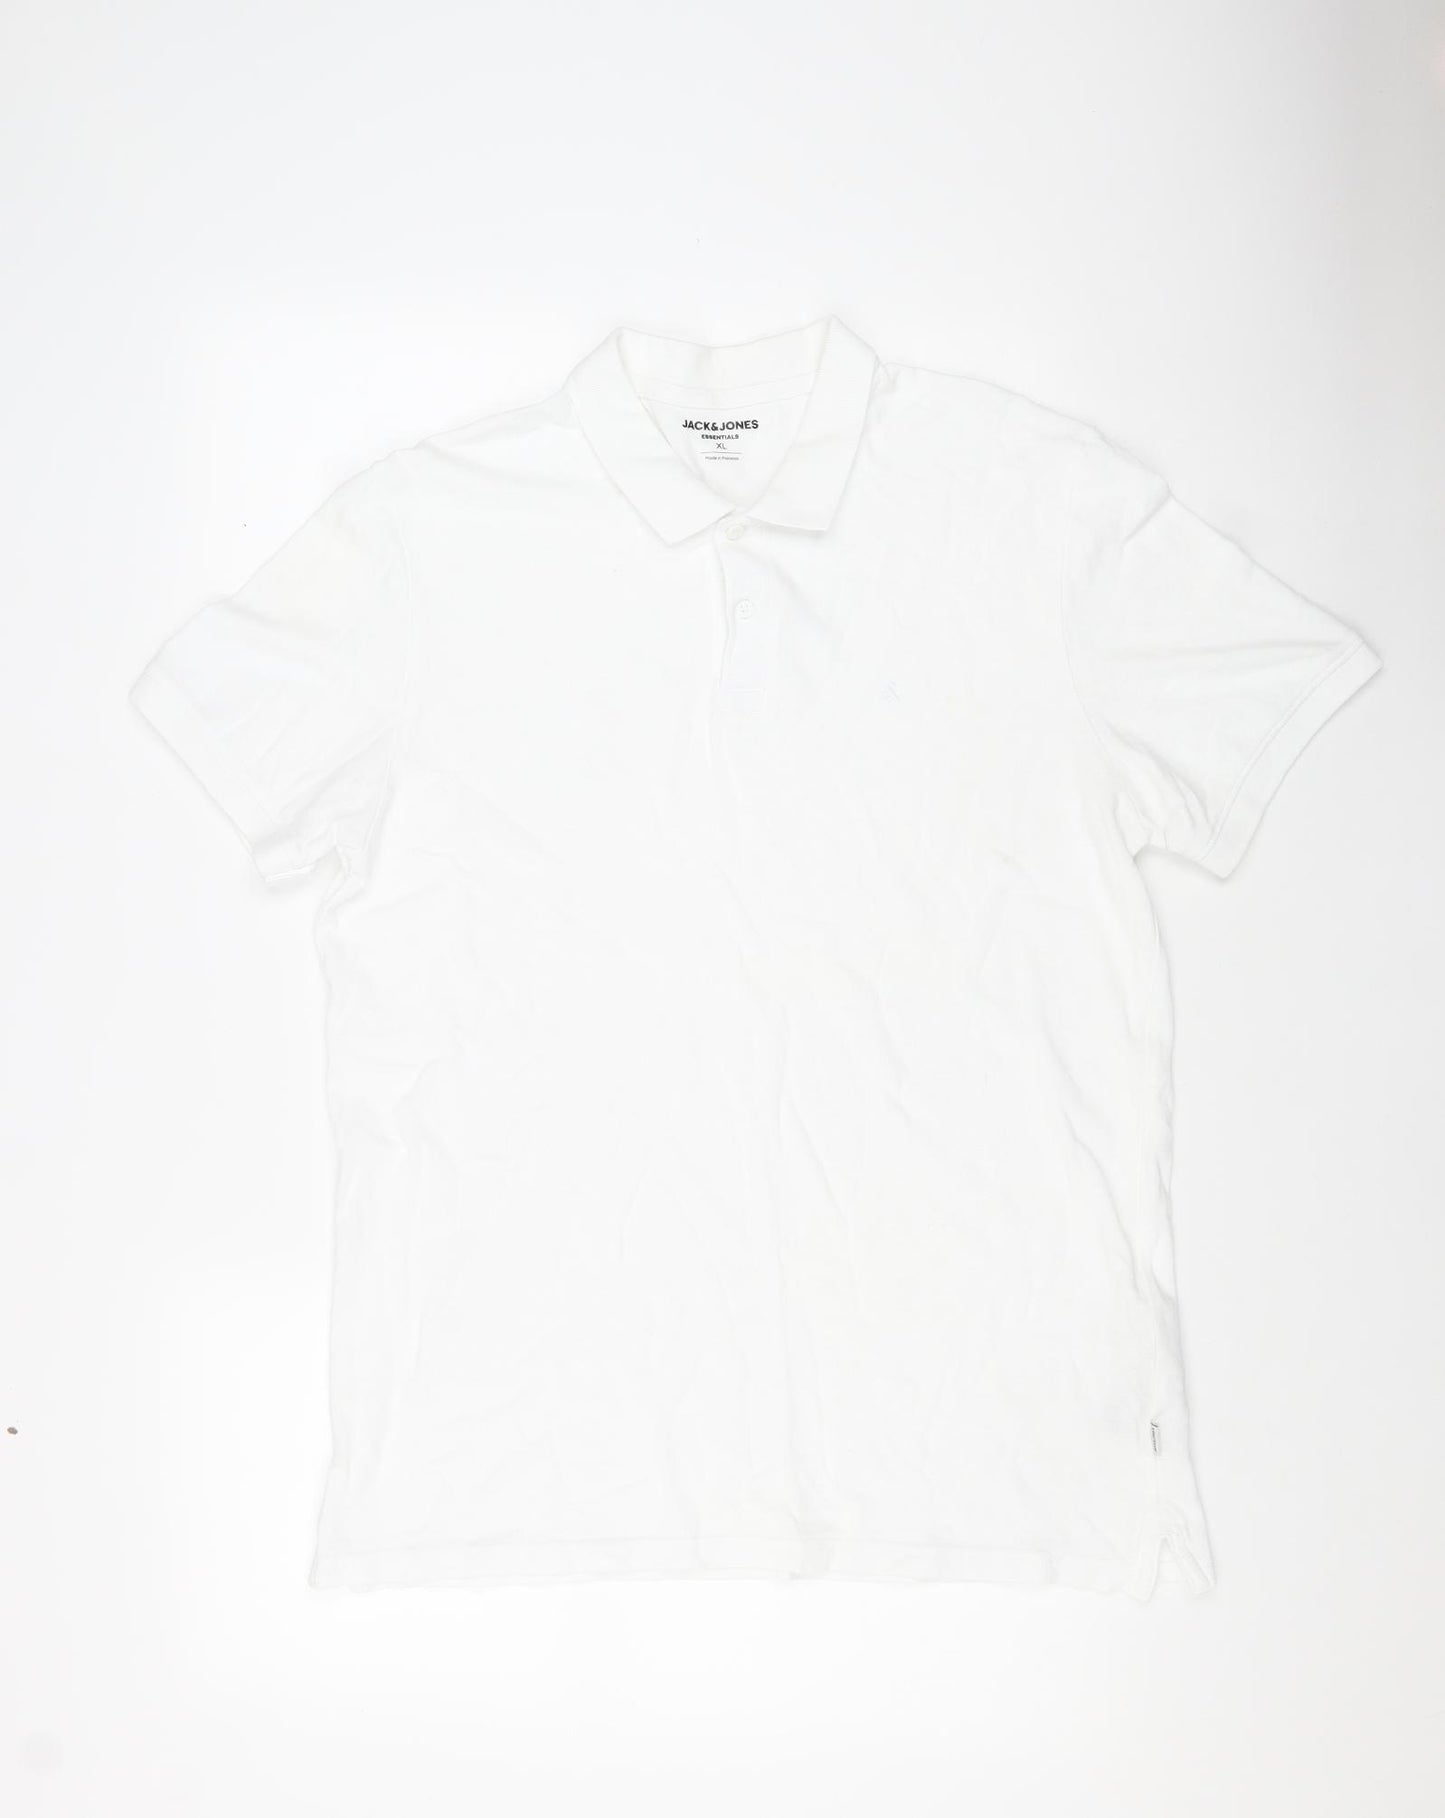 JACK & JONES Mens White Cotton T-Shirt Size XL Collared